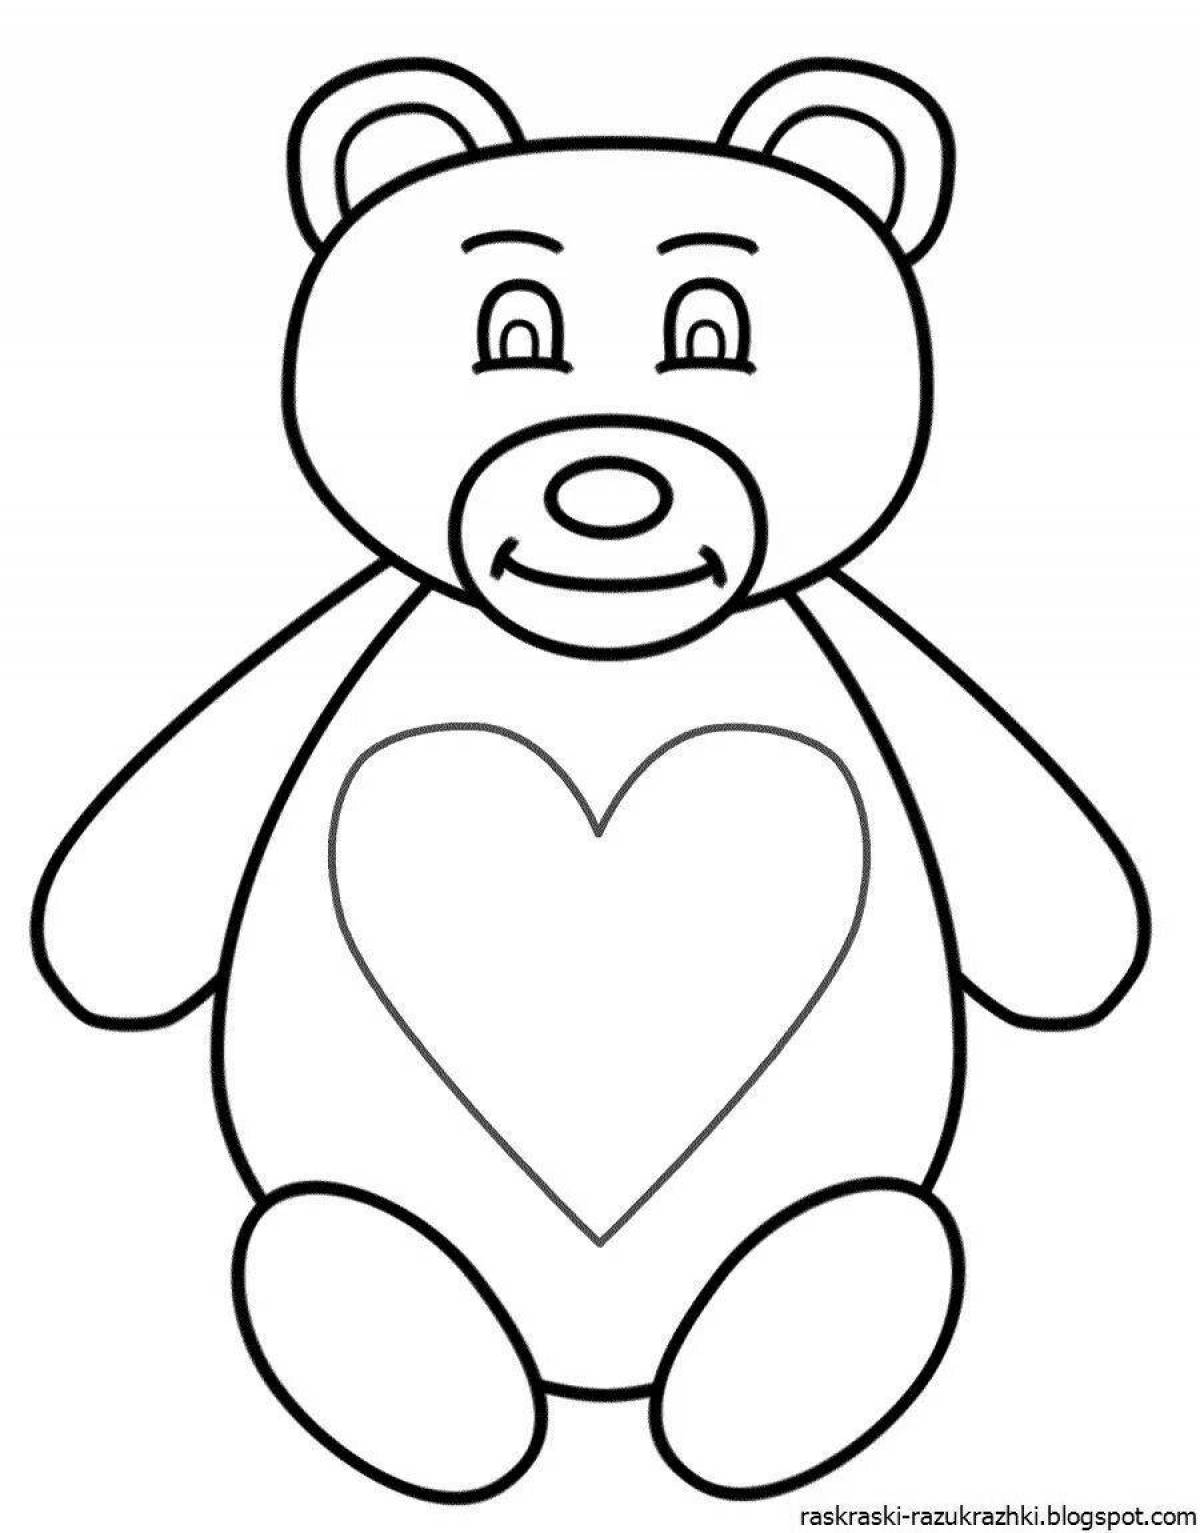 Распечатка медведя. Раскраска "мишки". Раскраска. Медвежонок. Медведь раскраска для детей. Медвежонок раскраска для детей.